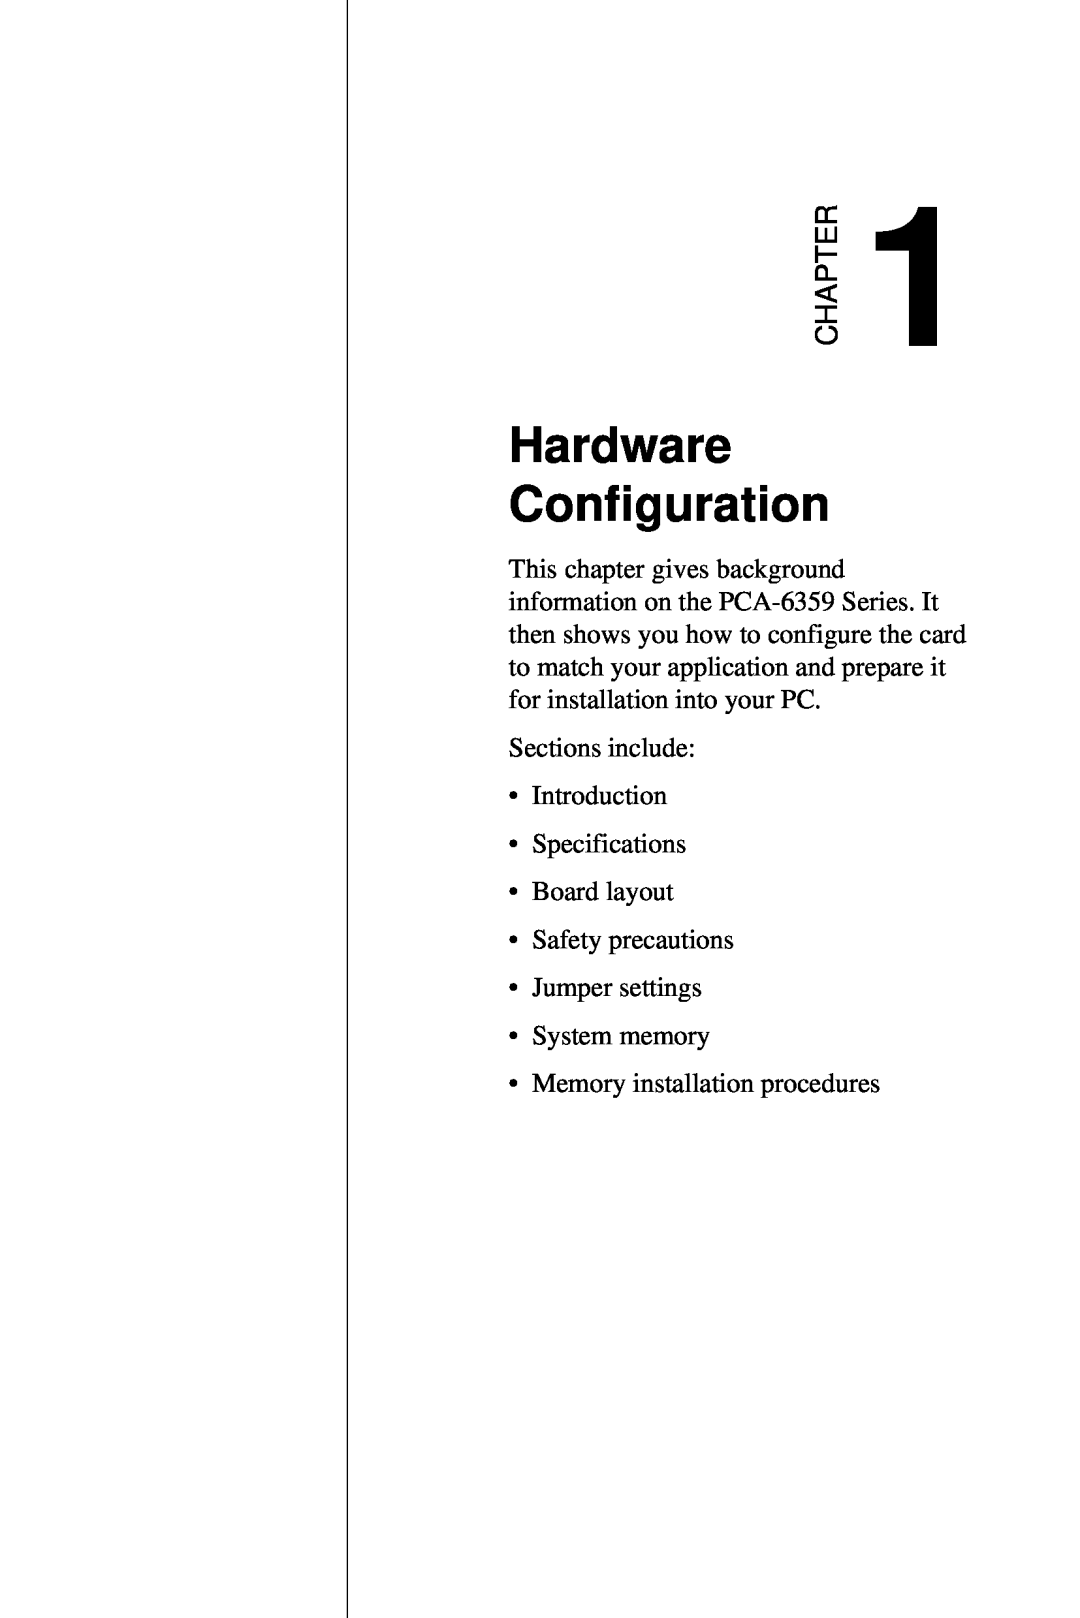 Advantech PCA-6359 user manual Hardware Configuration, Chapter 